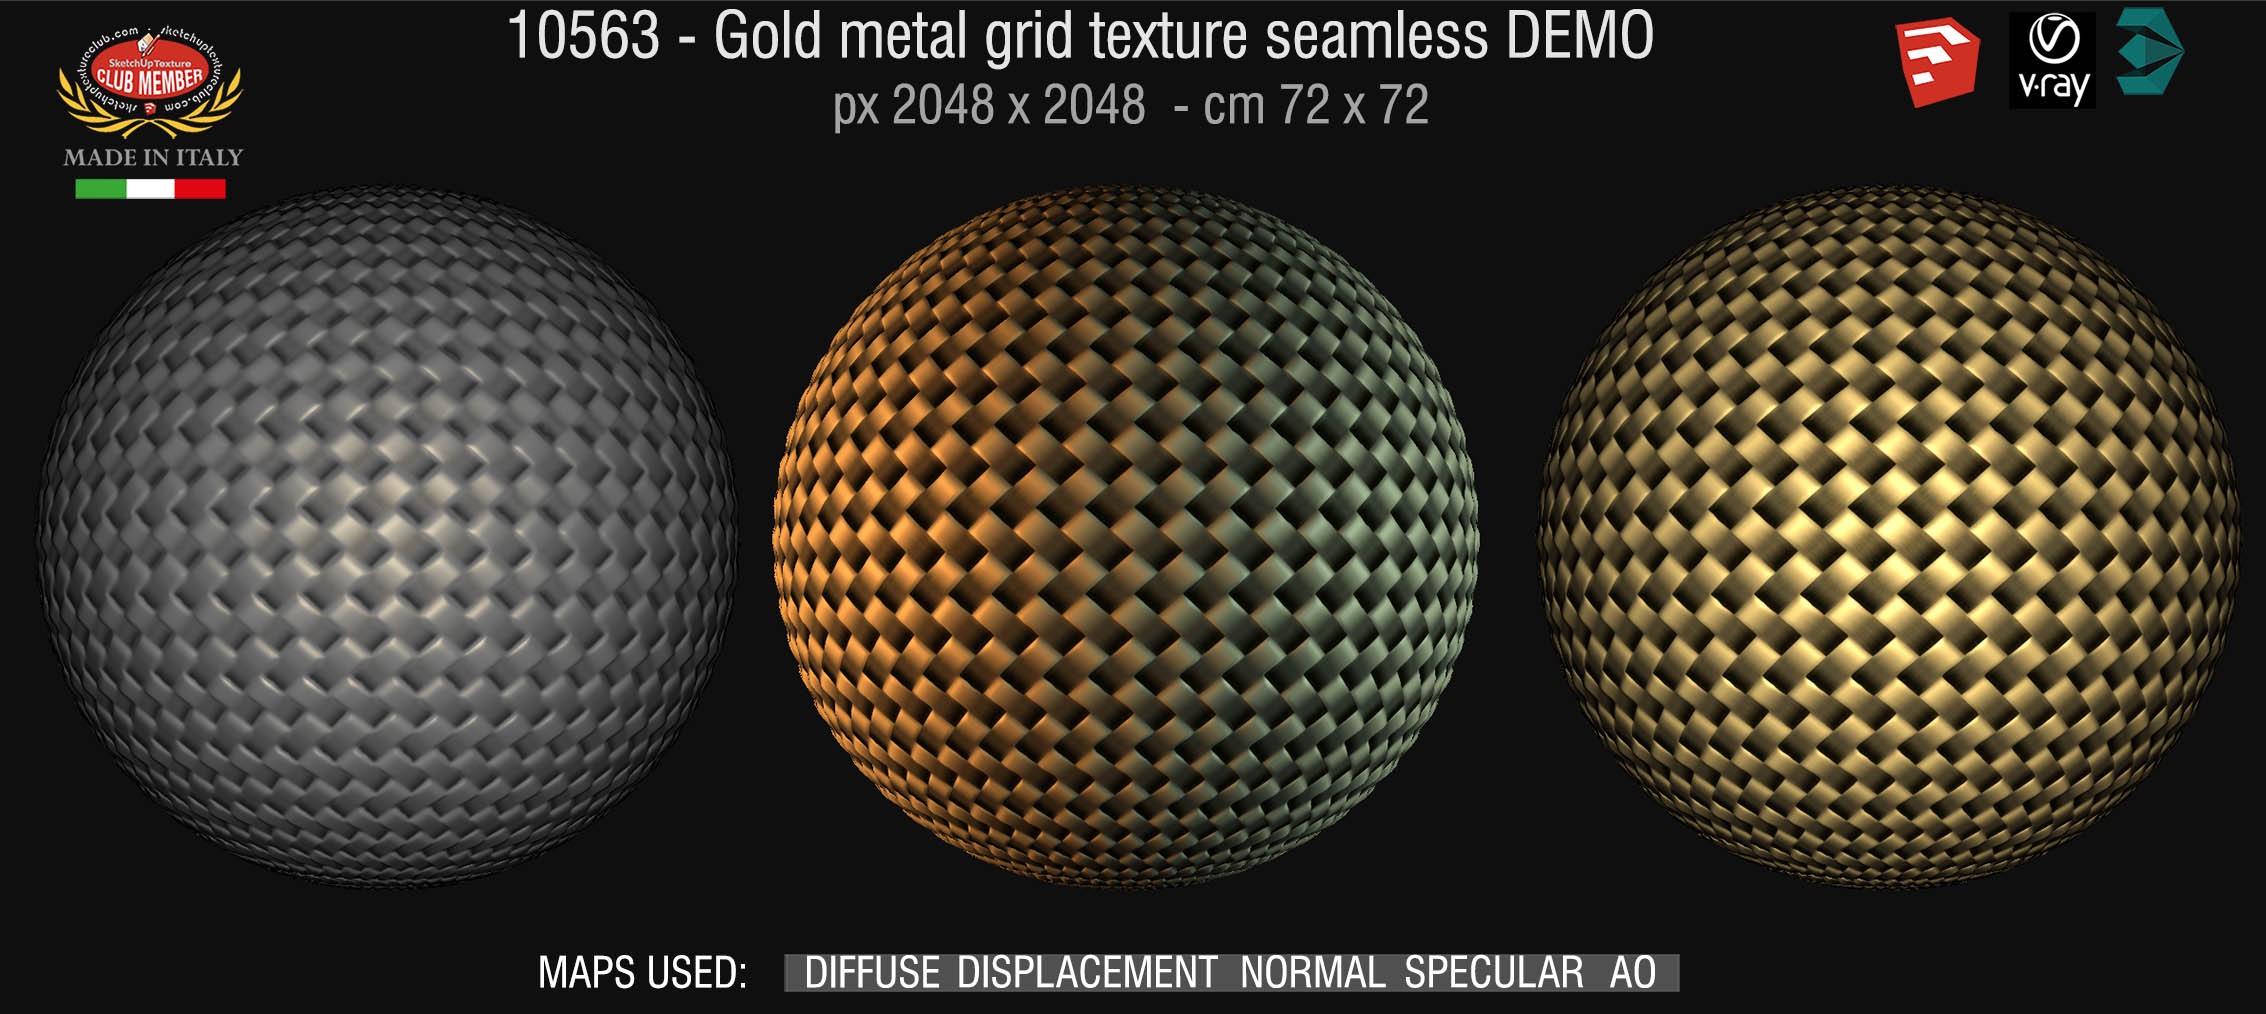 10563 HR Gold metal grid texture seamless + maps DEMO